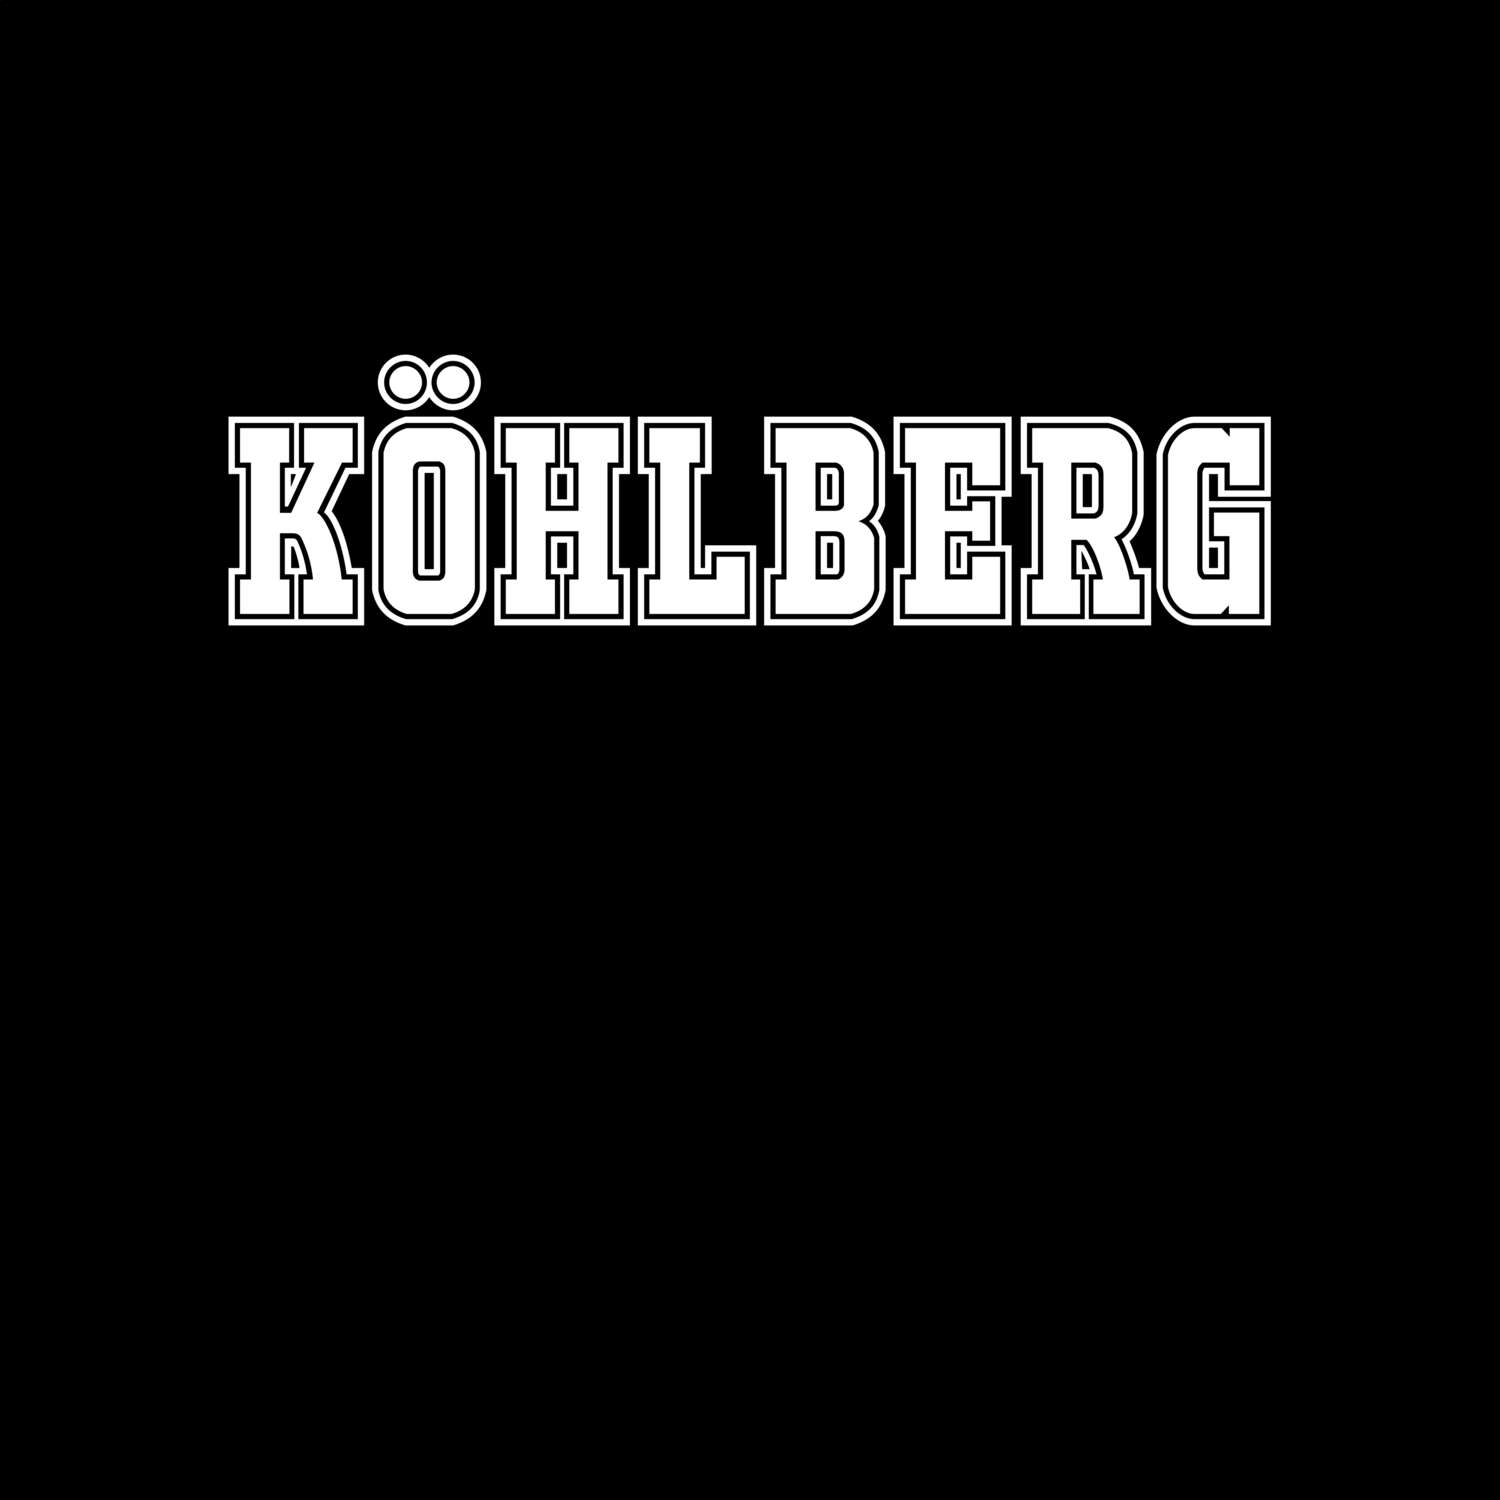 Köhlberg T-Shirt »Classic«